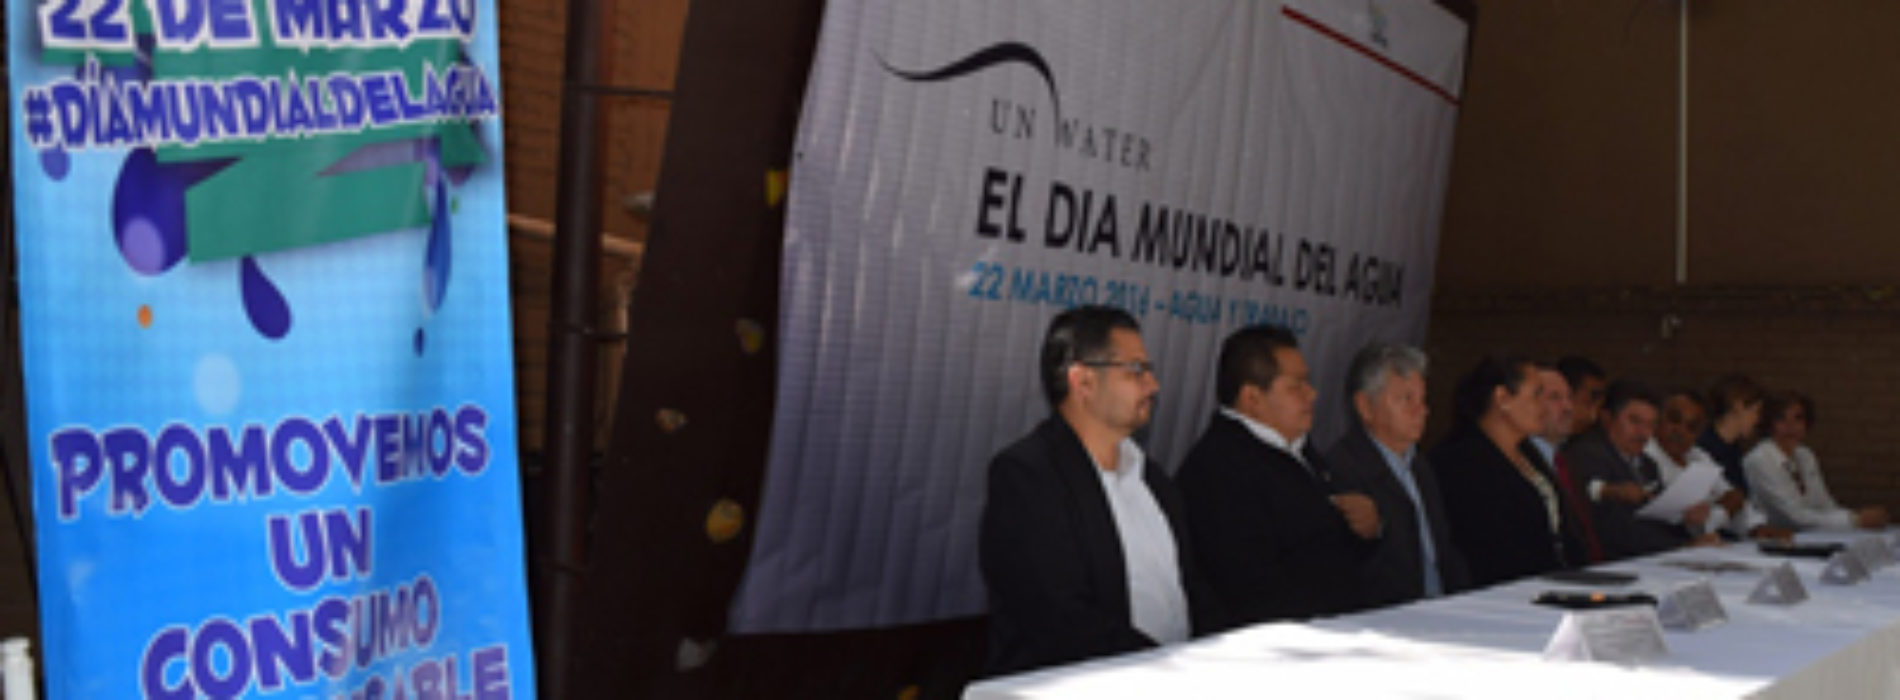 Promueve SAPAO un consumo responsable del agua: Sergio Pablo Ríos Aquino